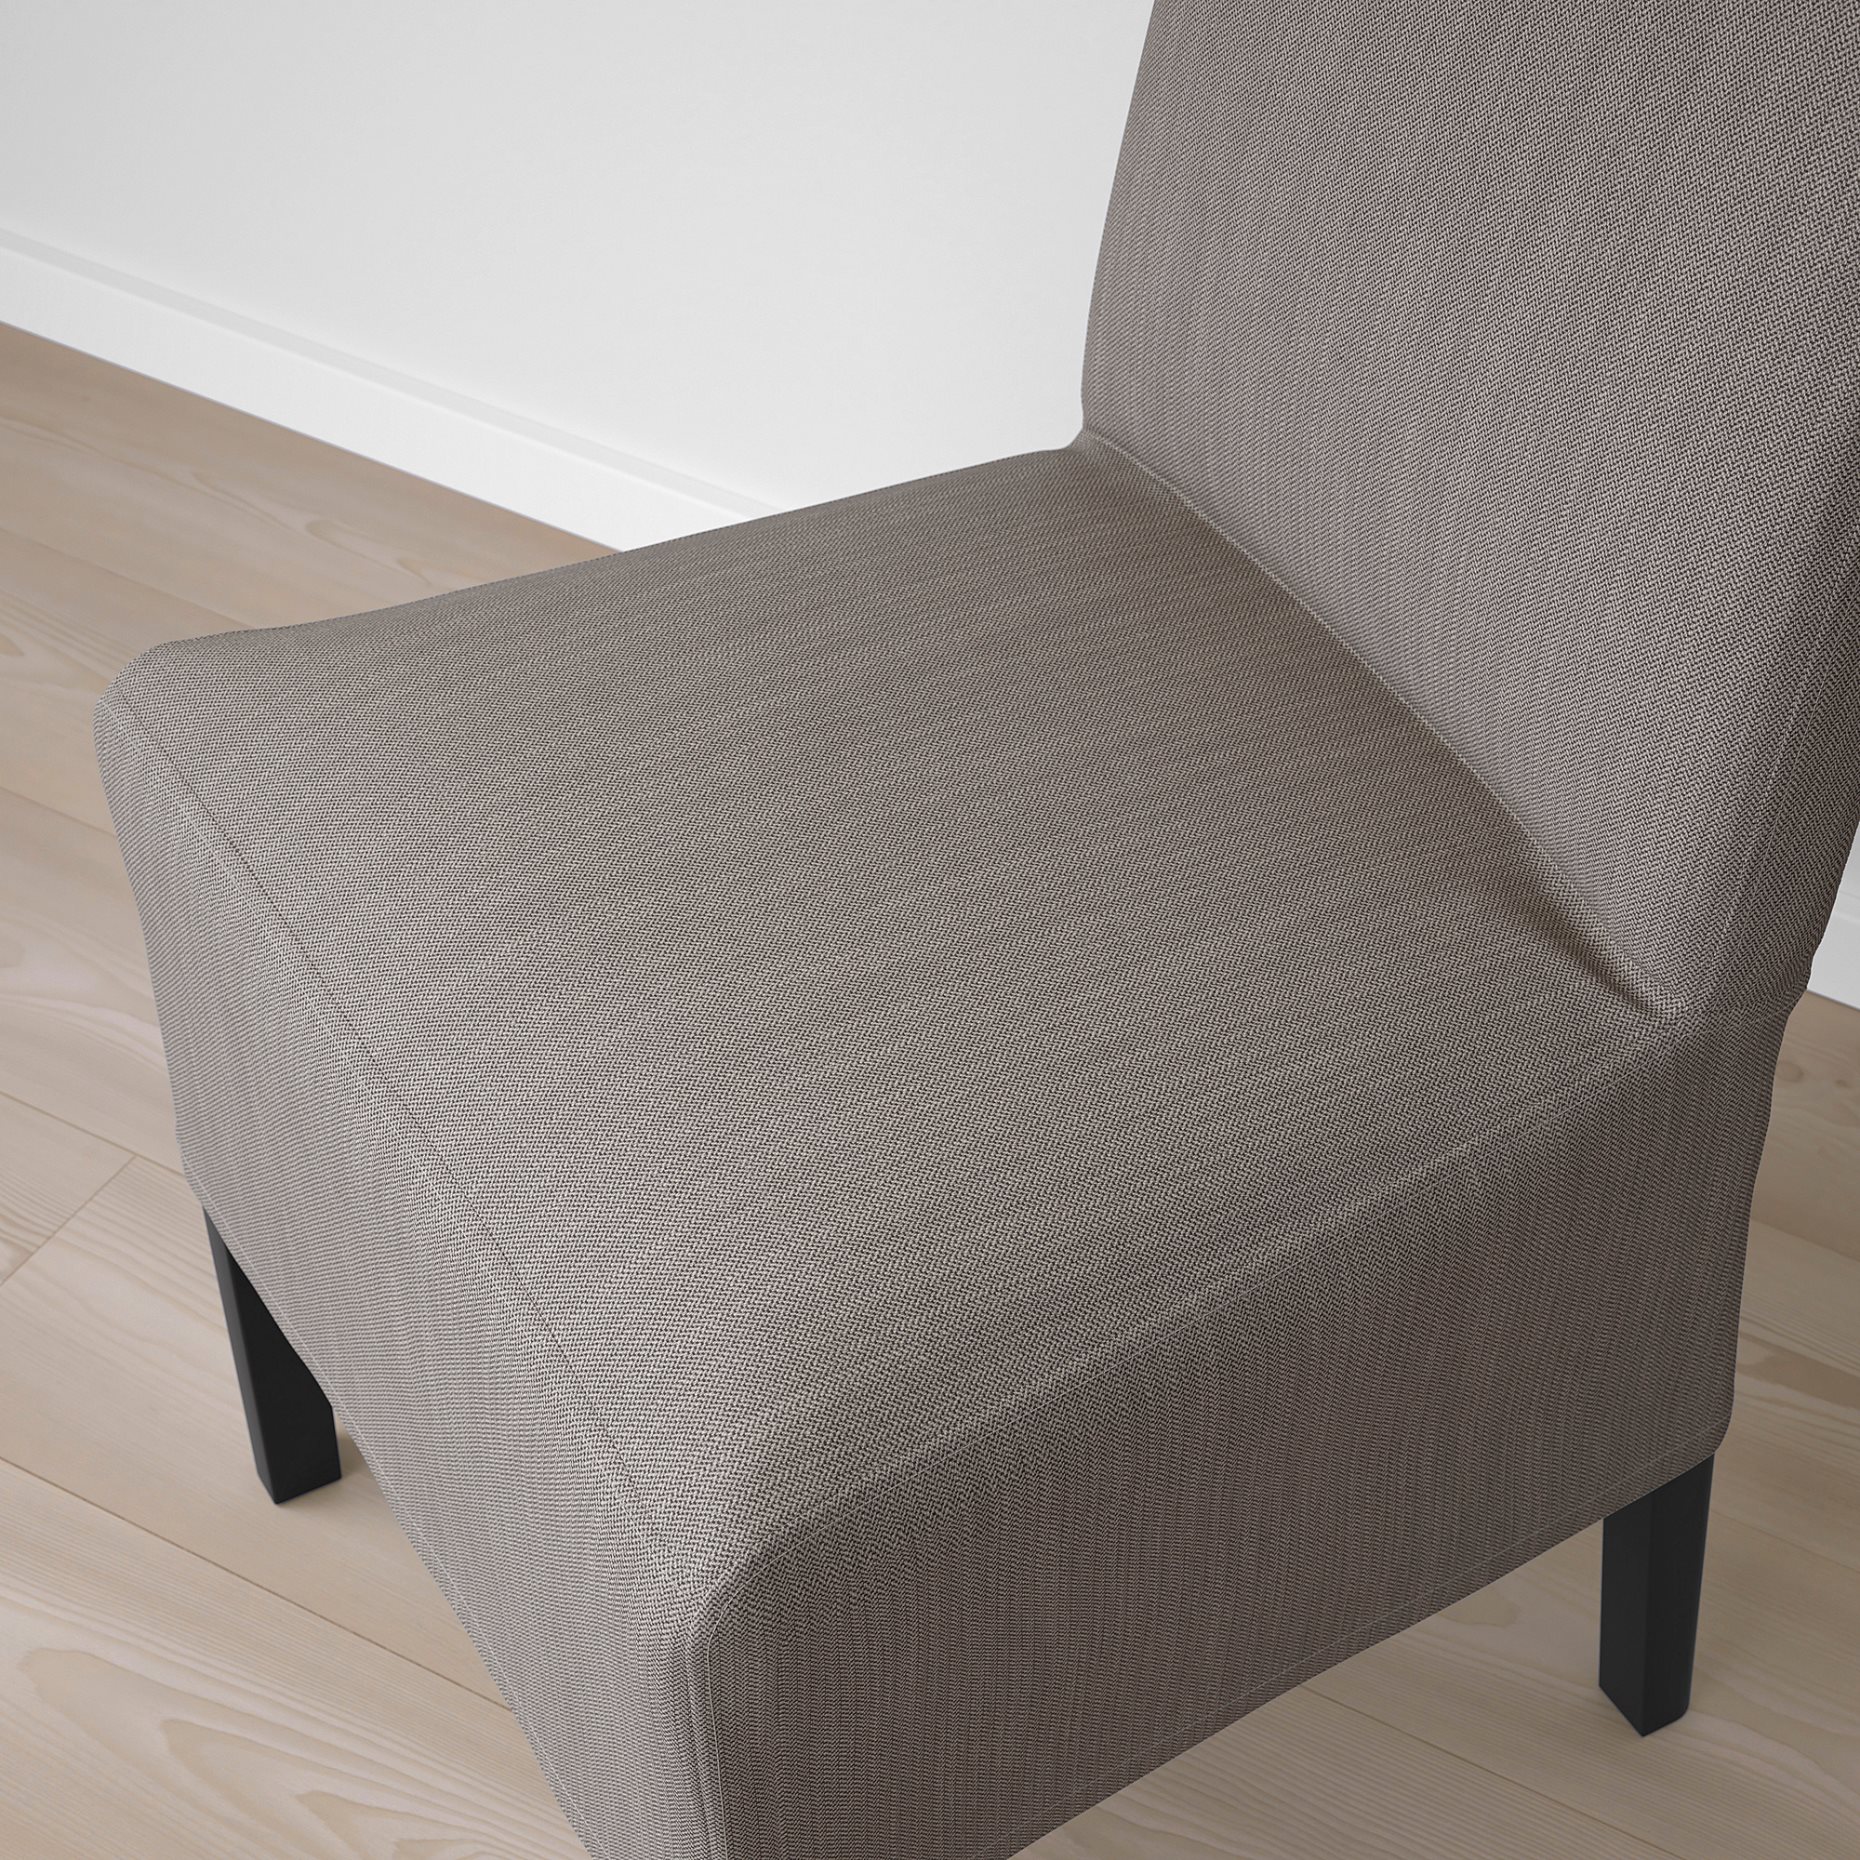 BERGMUND, καρέκλα με κάλυμμα μεσαίου μάκρους, 993.860.98